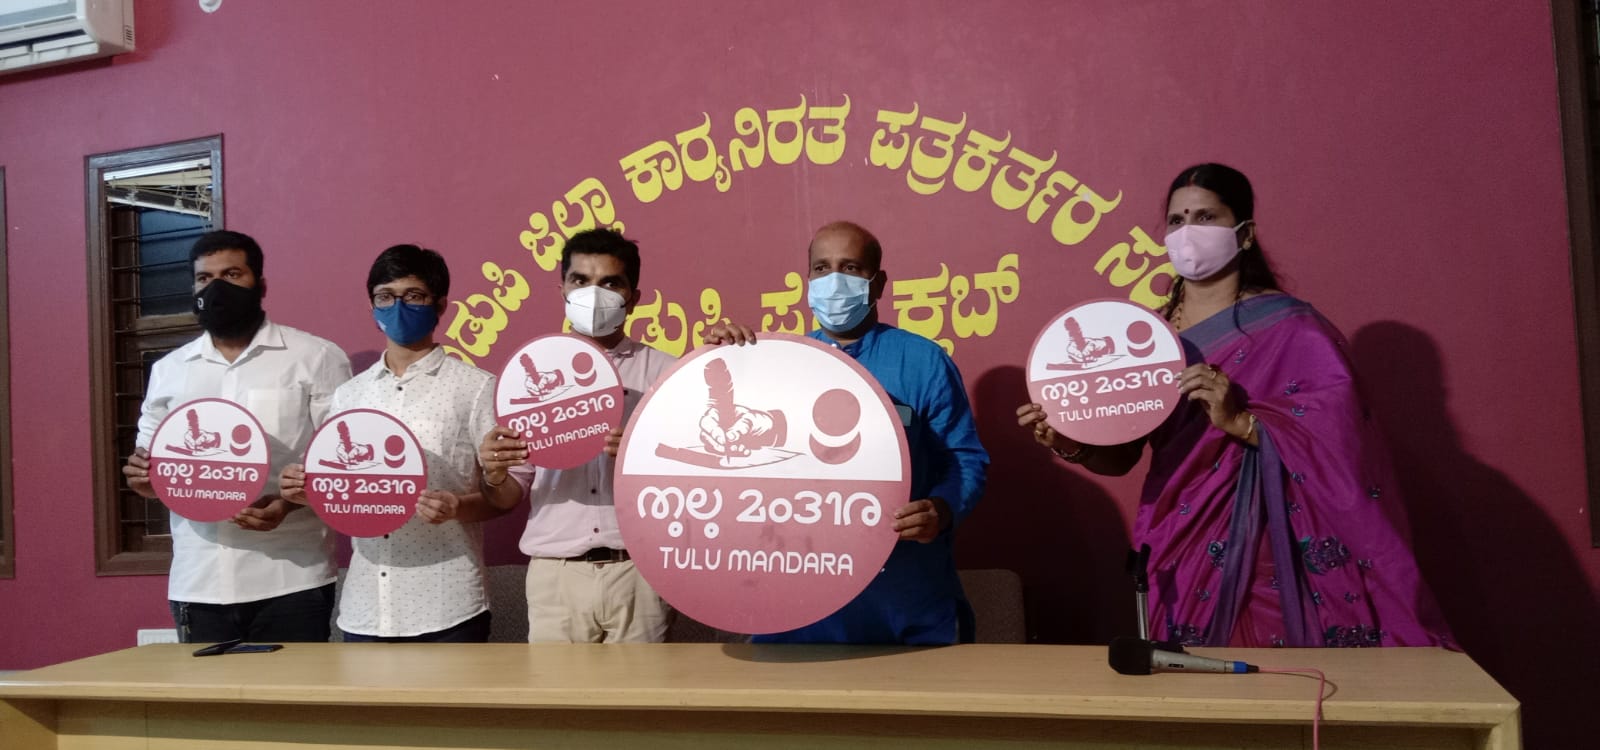 Youths attempt to defacing Hanuman photo at Doddanagudde, three arrested